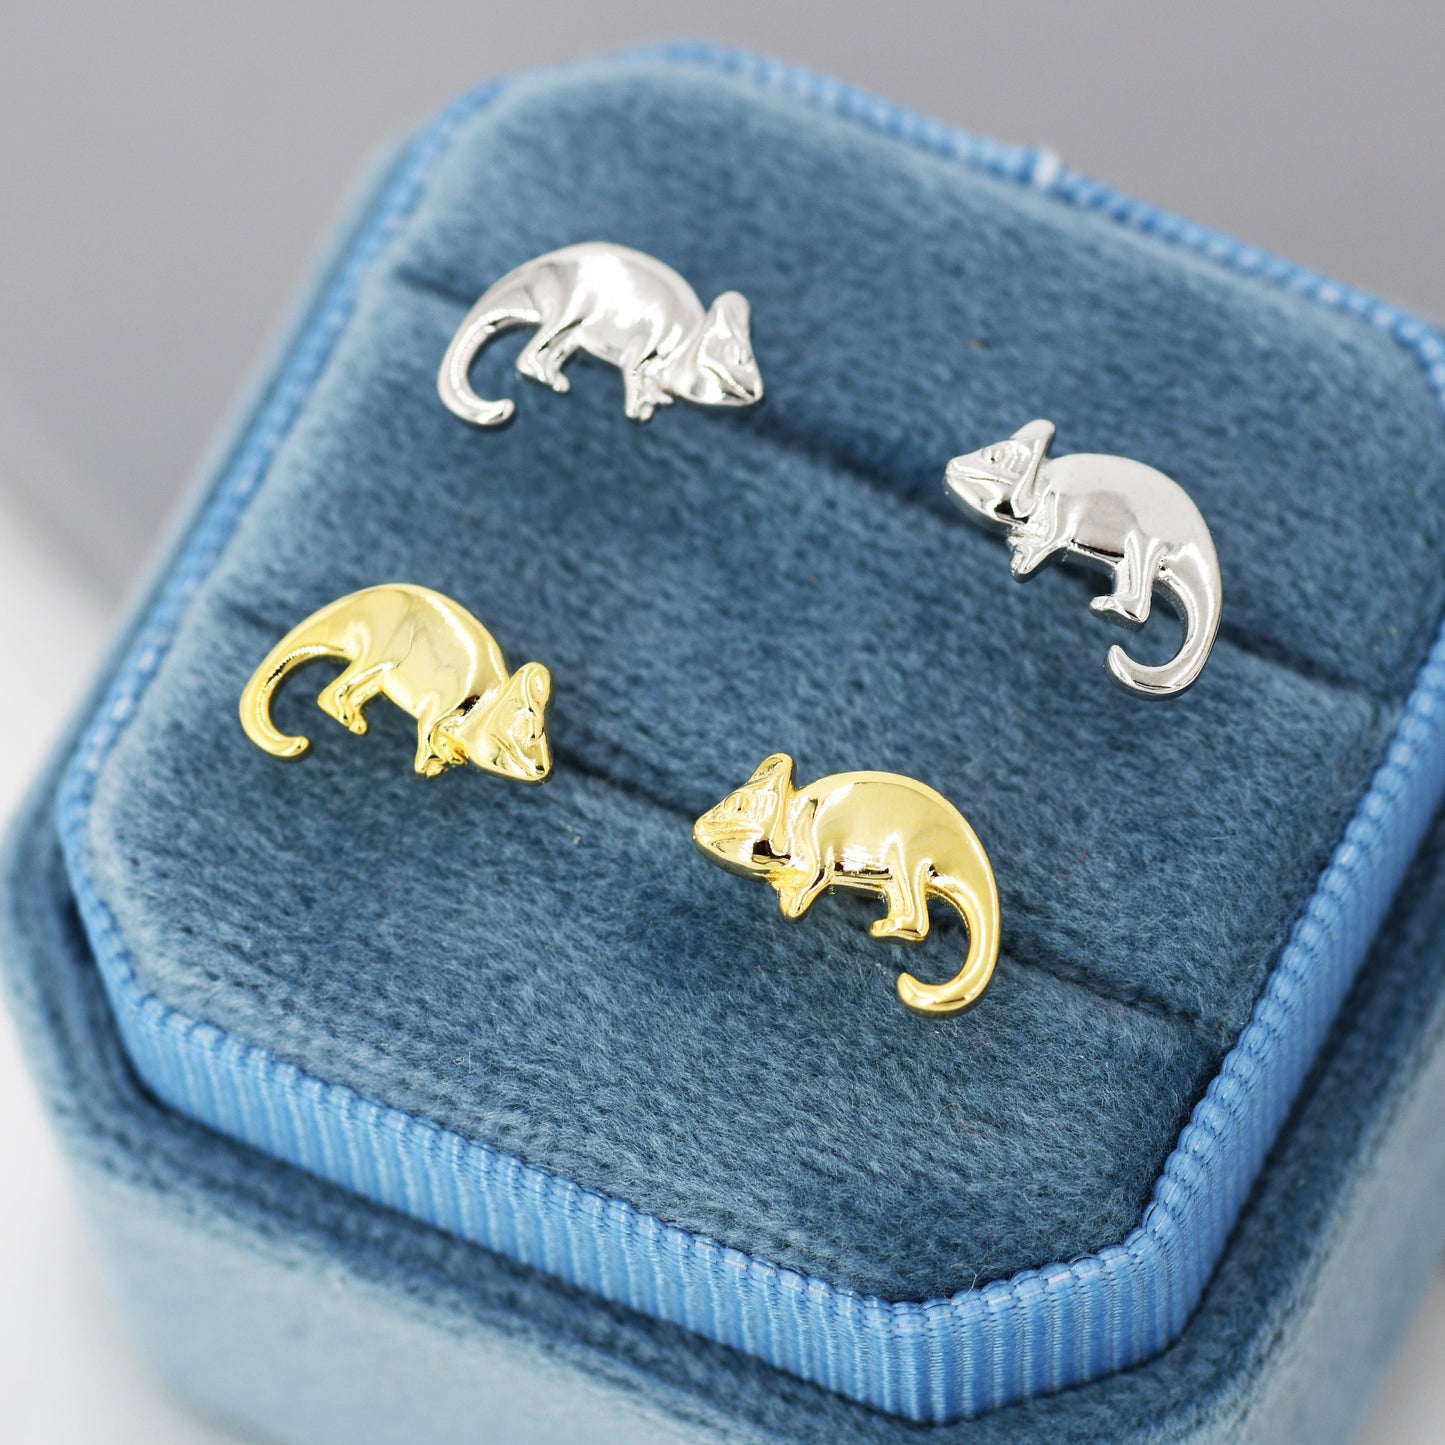 Chameleon Stud Earrings in Sterling Silver, Silver or Gold, Nature Inspired Animal Earrings, Lizard Earrings